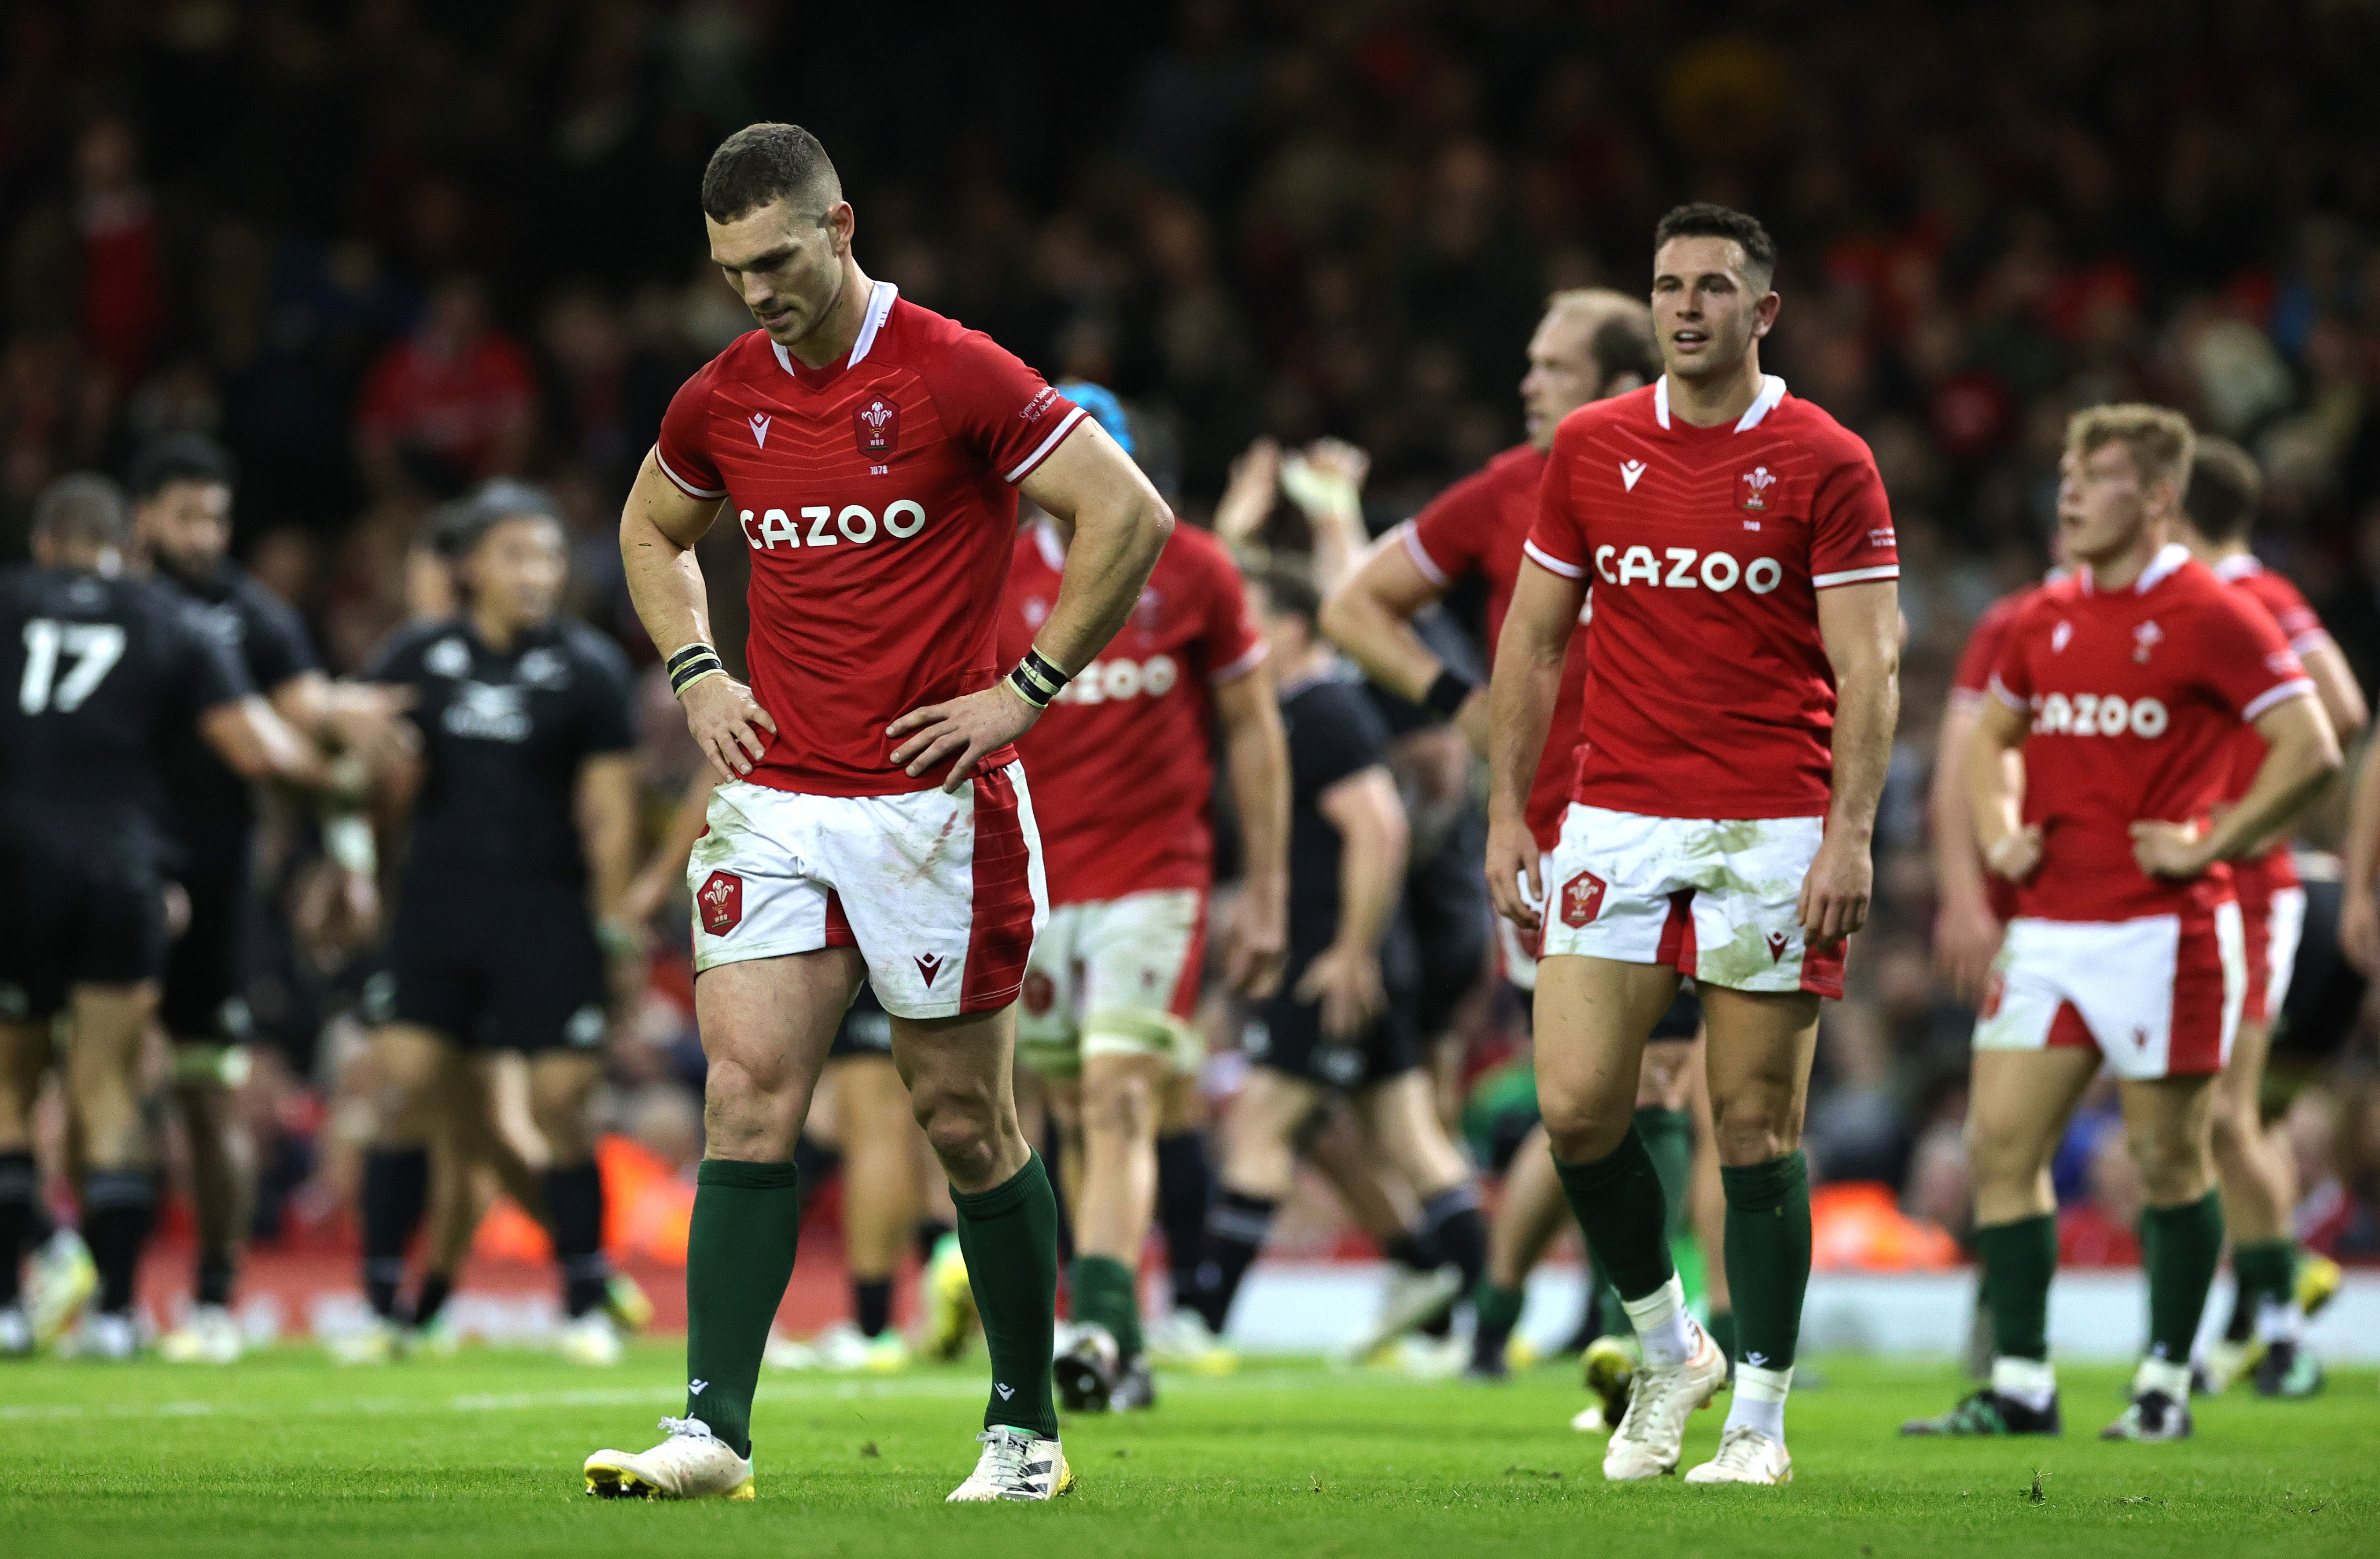 Wales lost heavily to New Zealand last weekend